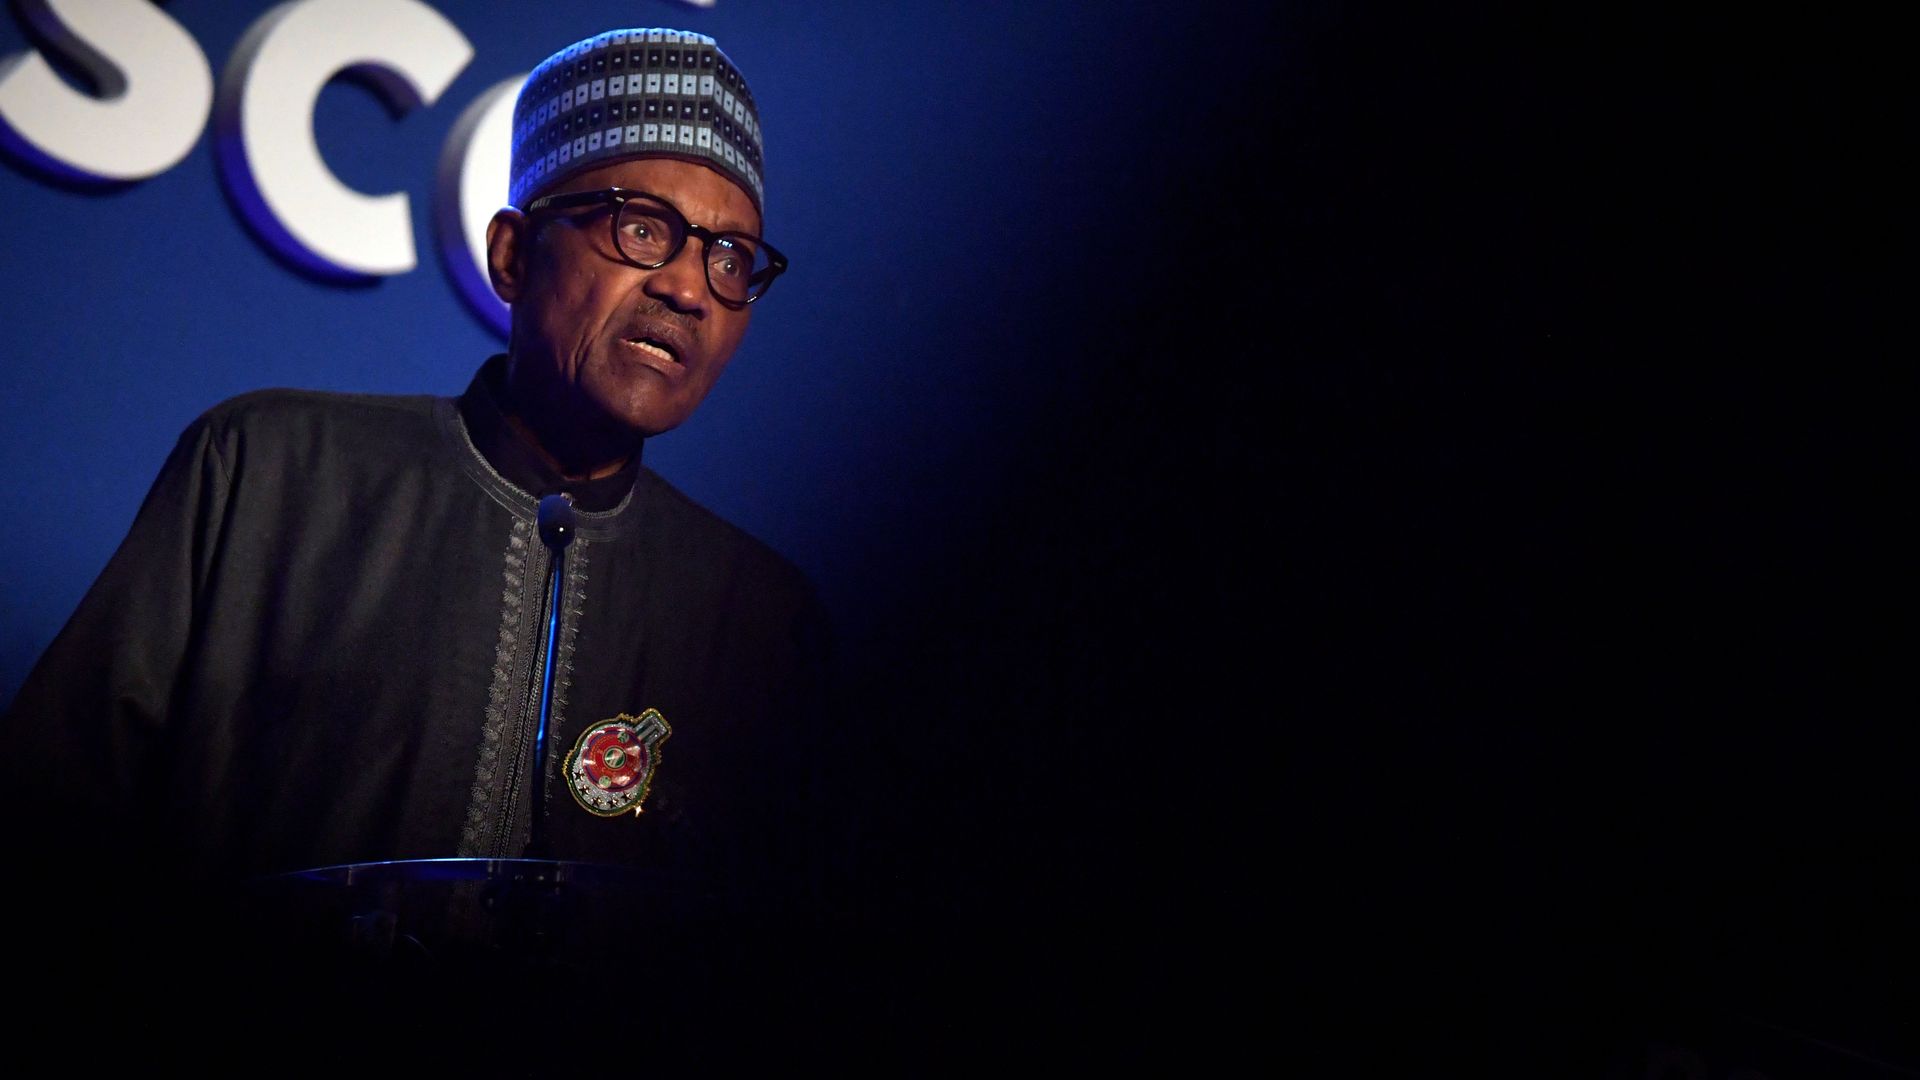 Nigeria's President Muhammadu Buhari gives a speech at UNESCO headquarters in Paris.